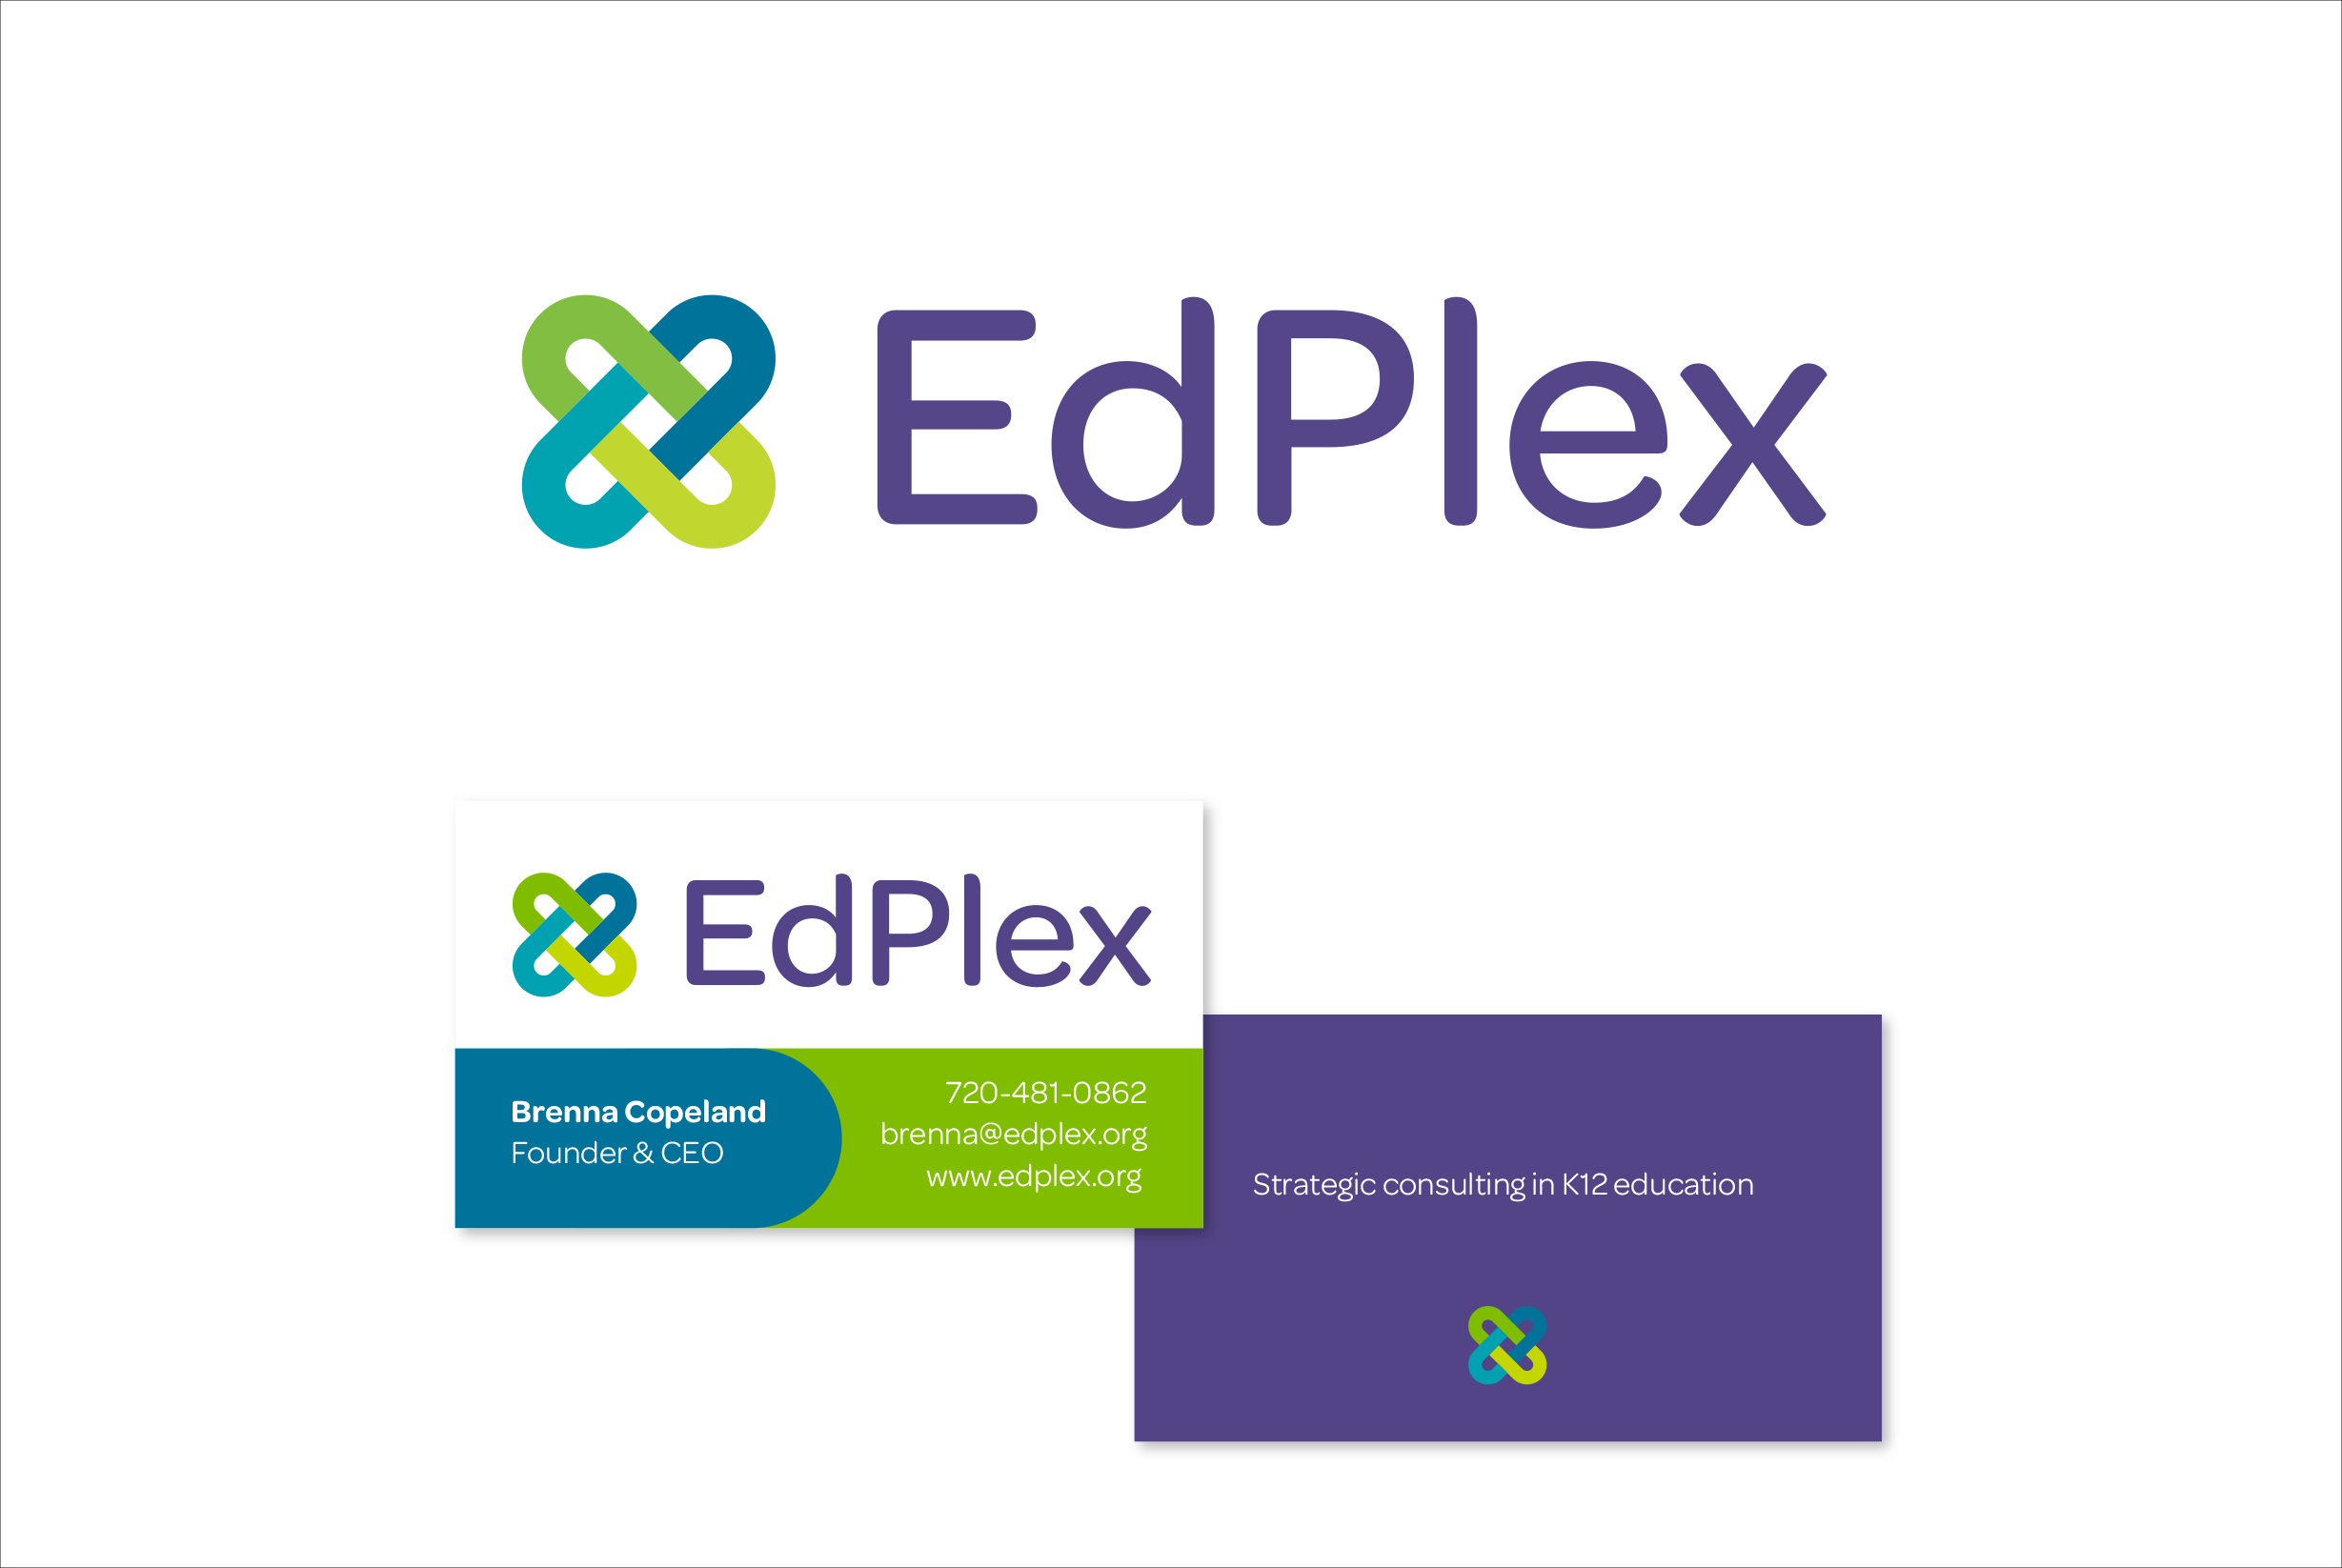 EdPlex